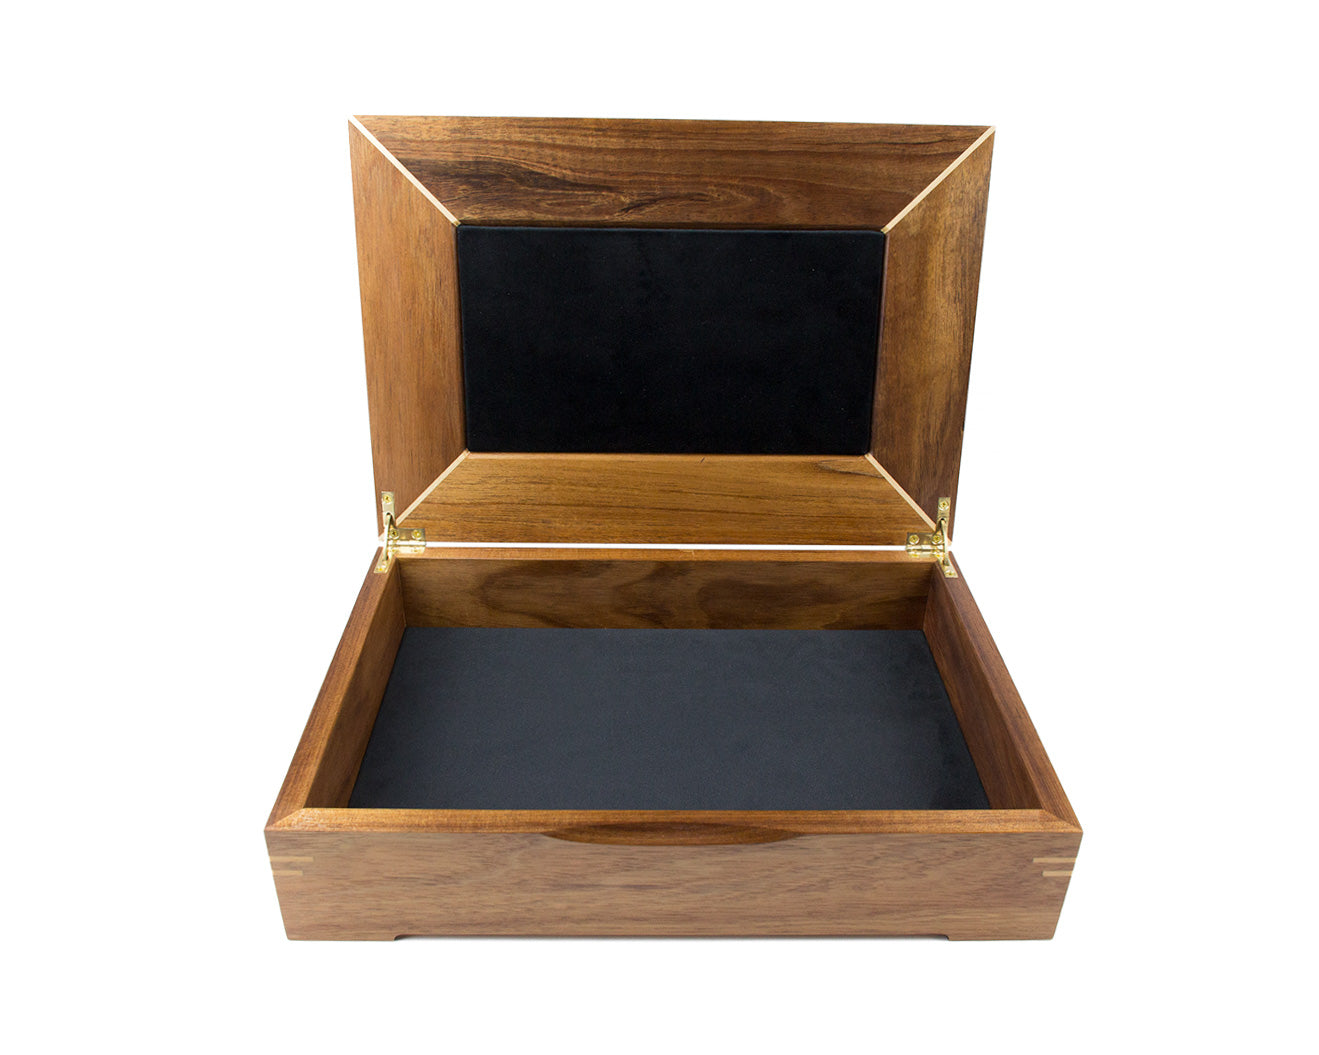 Wooden Document Box handcrafted from Tasmanian Blackwood & Walnut Burl veneer